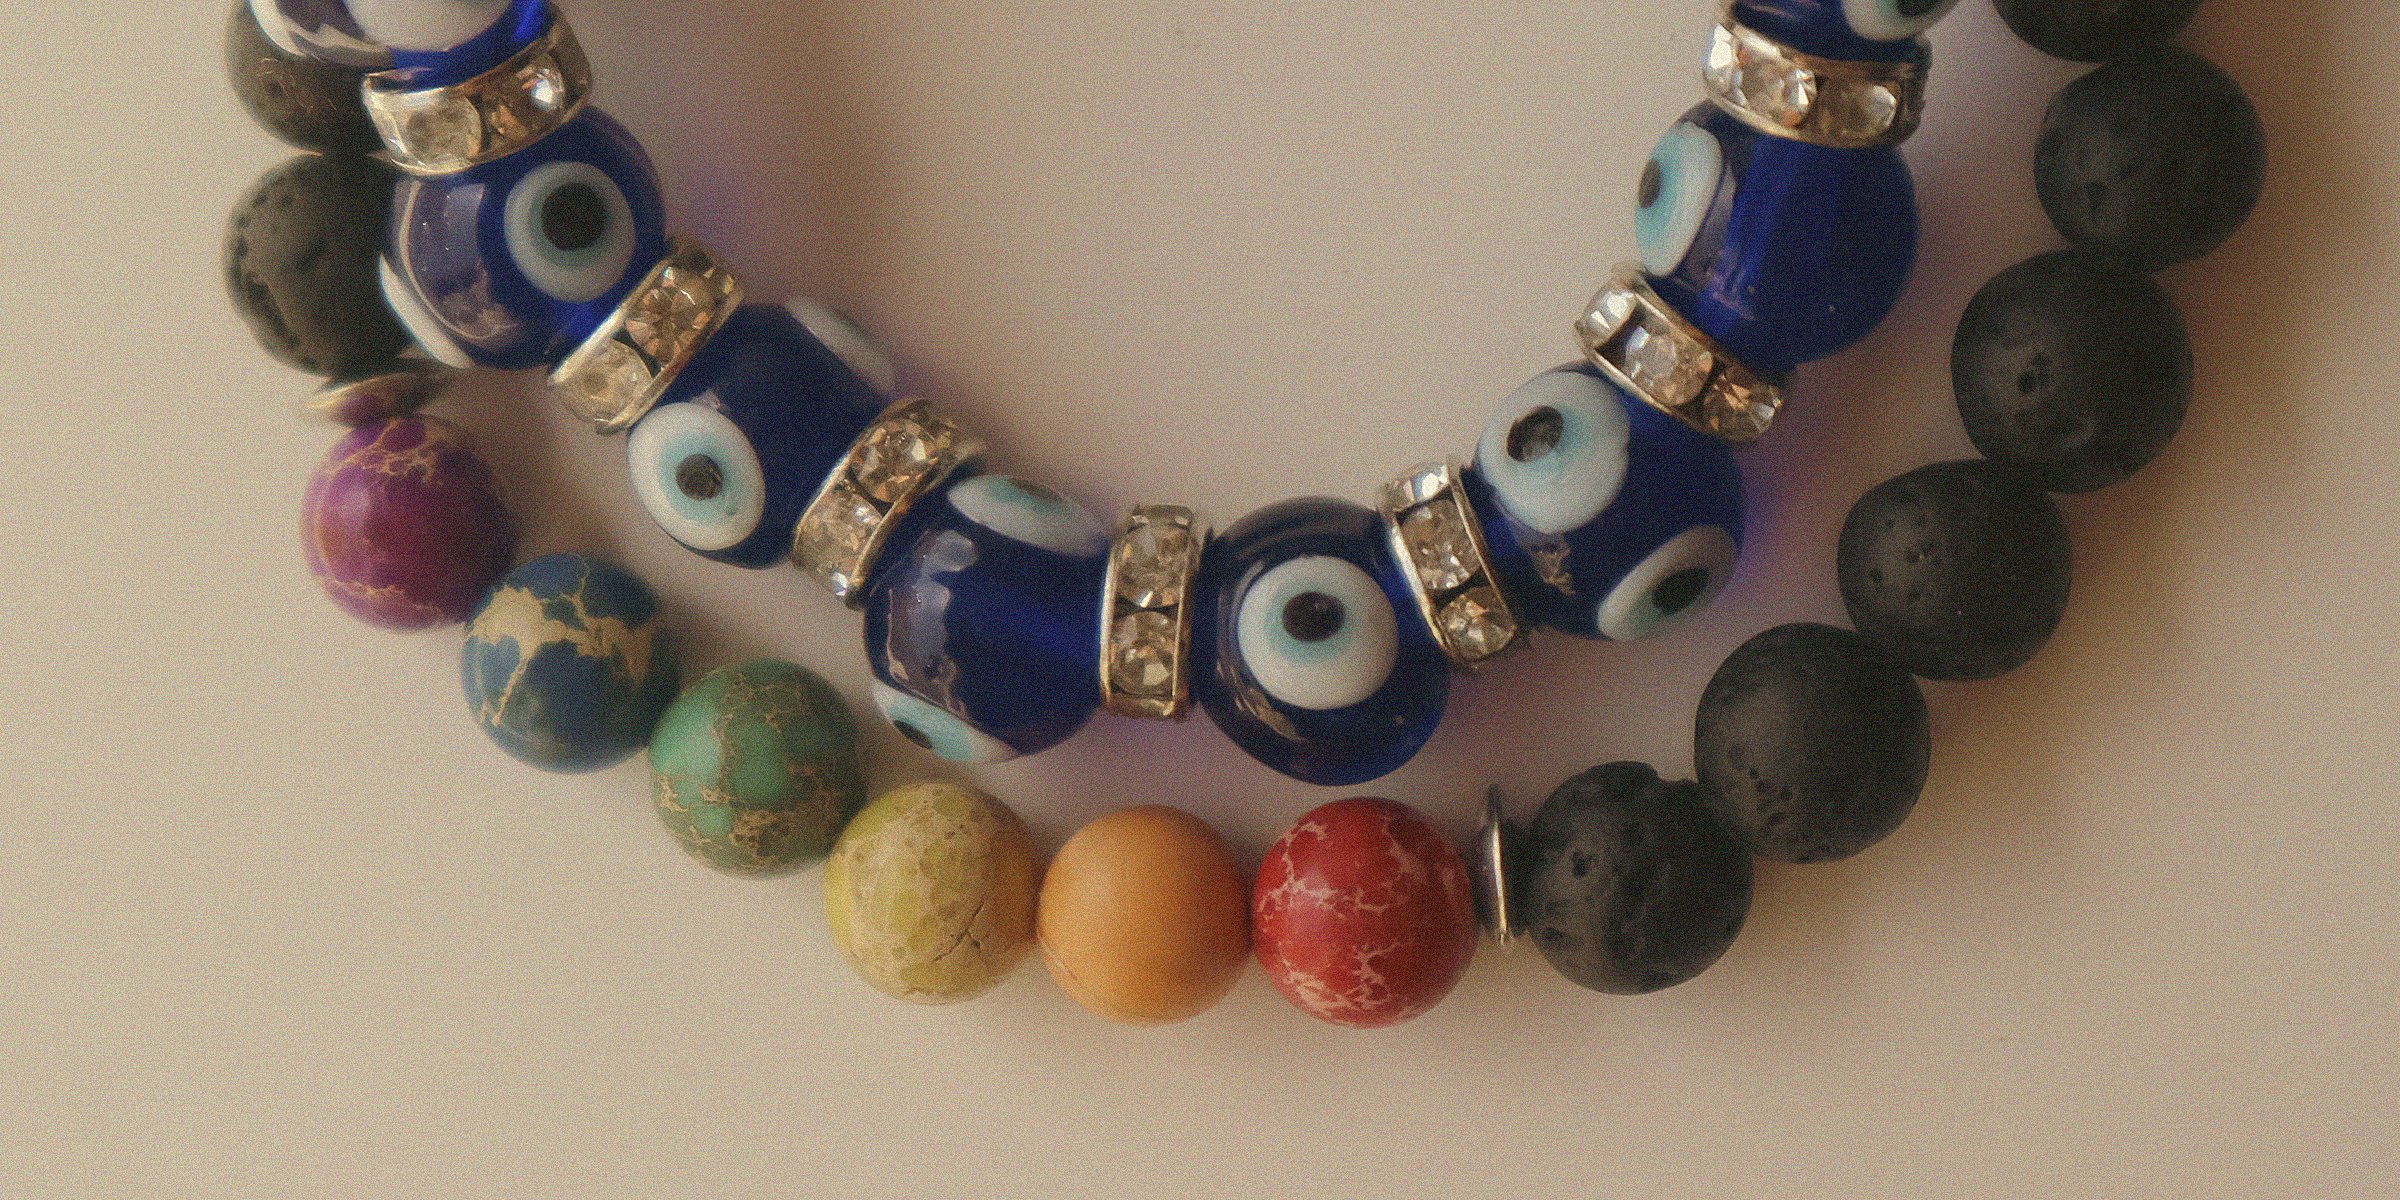 Evil eye beads alongside colorful beads | Source: Unsplash